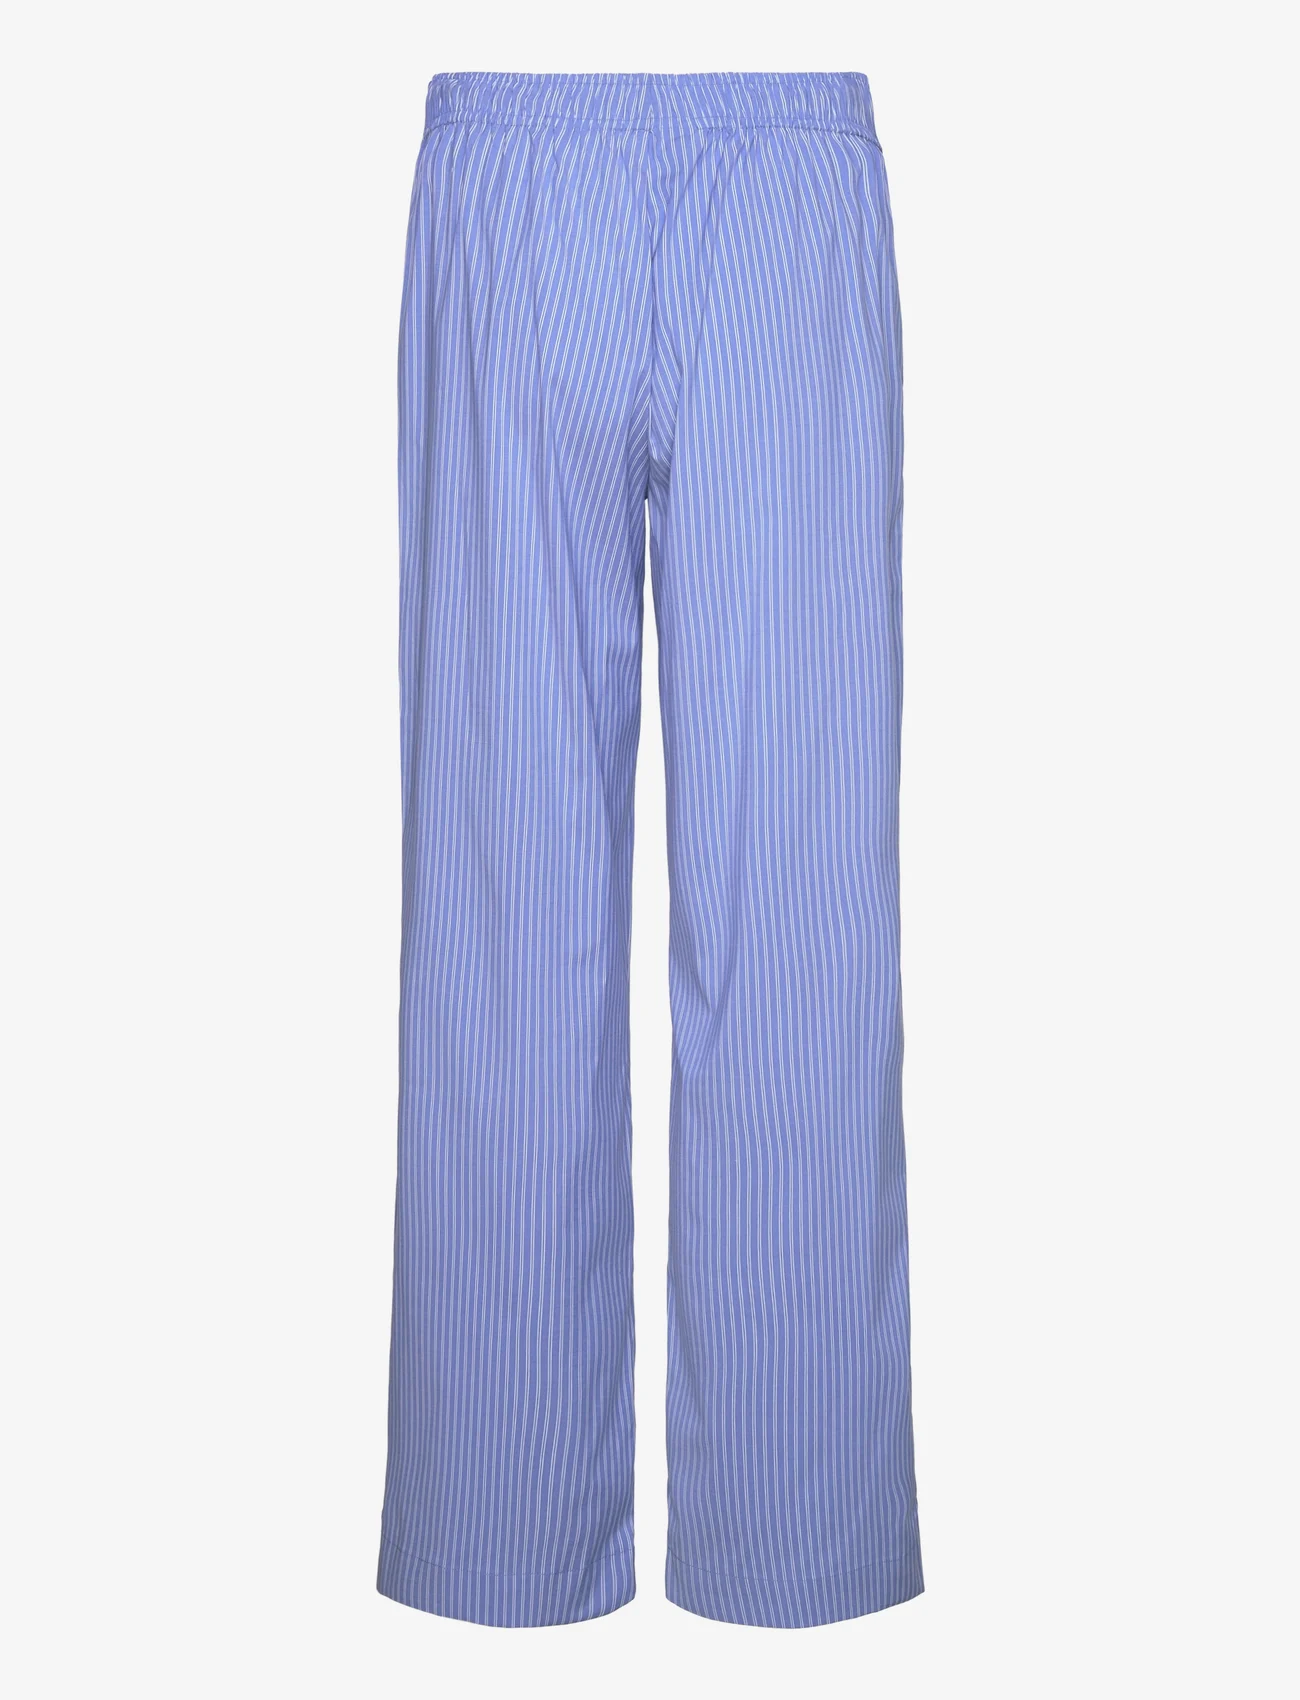 Sofie Schnoor - Trousers - plačios kelnės - blue striped - 1